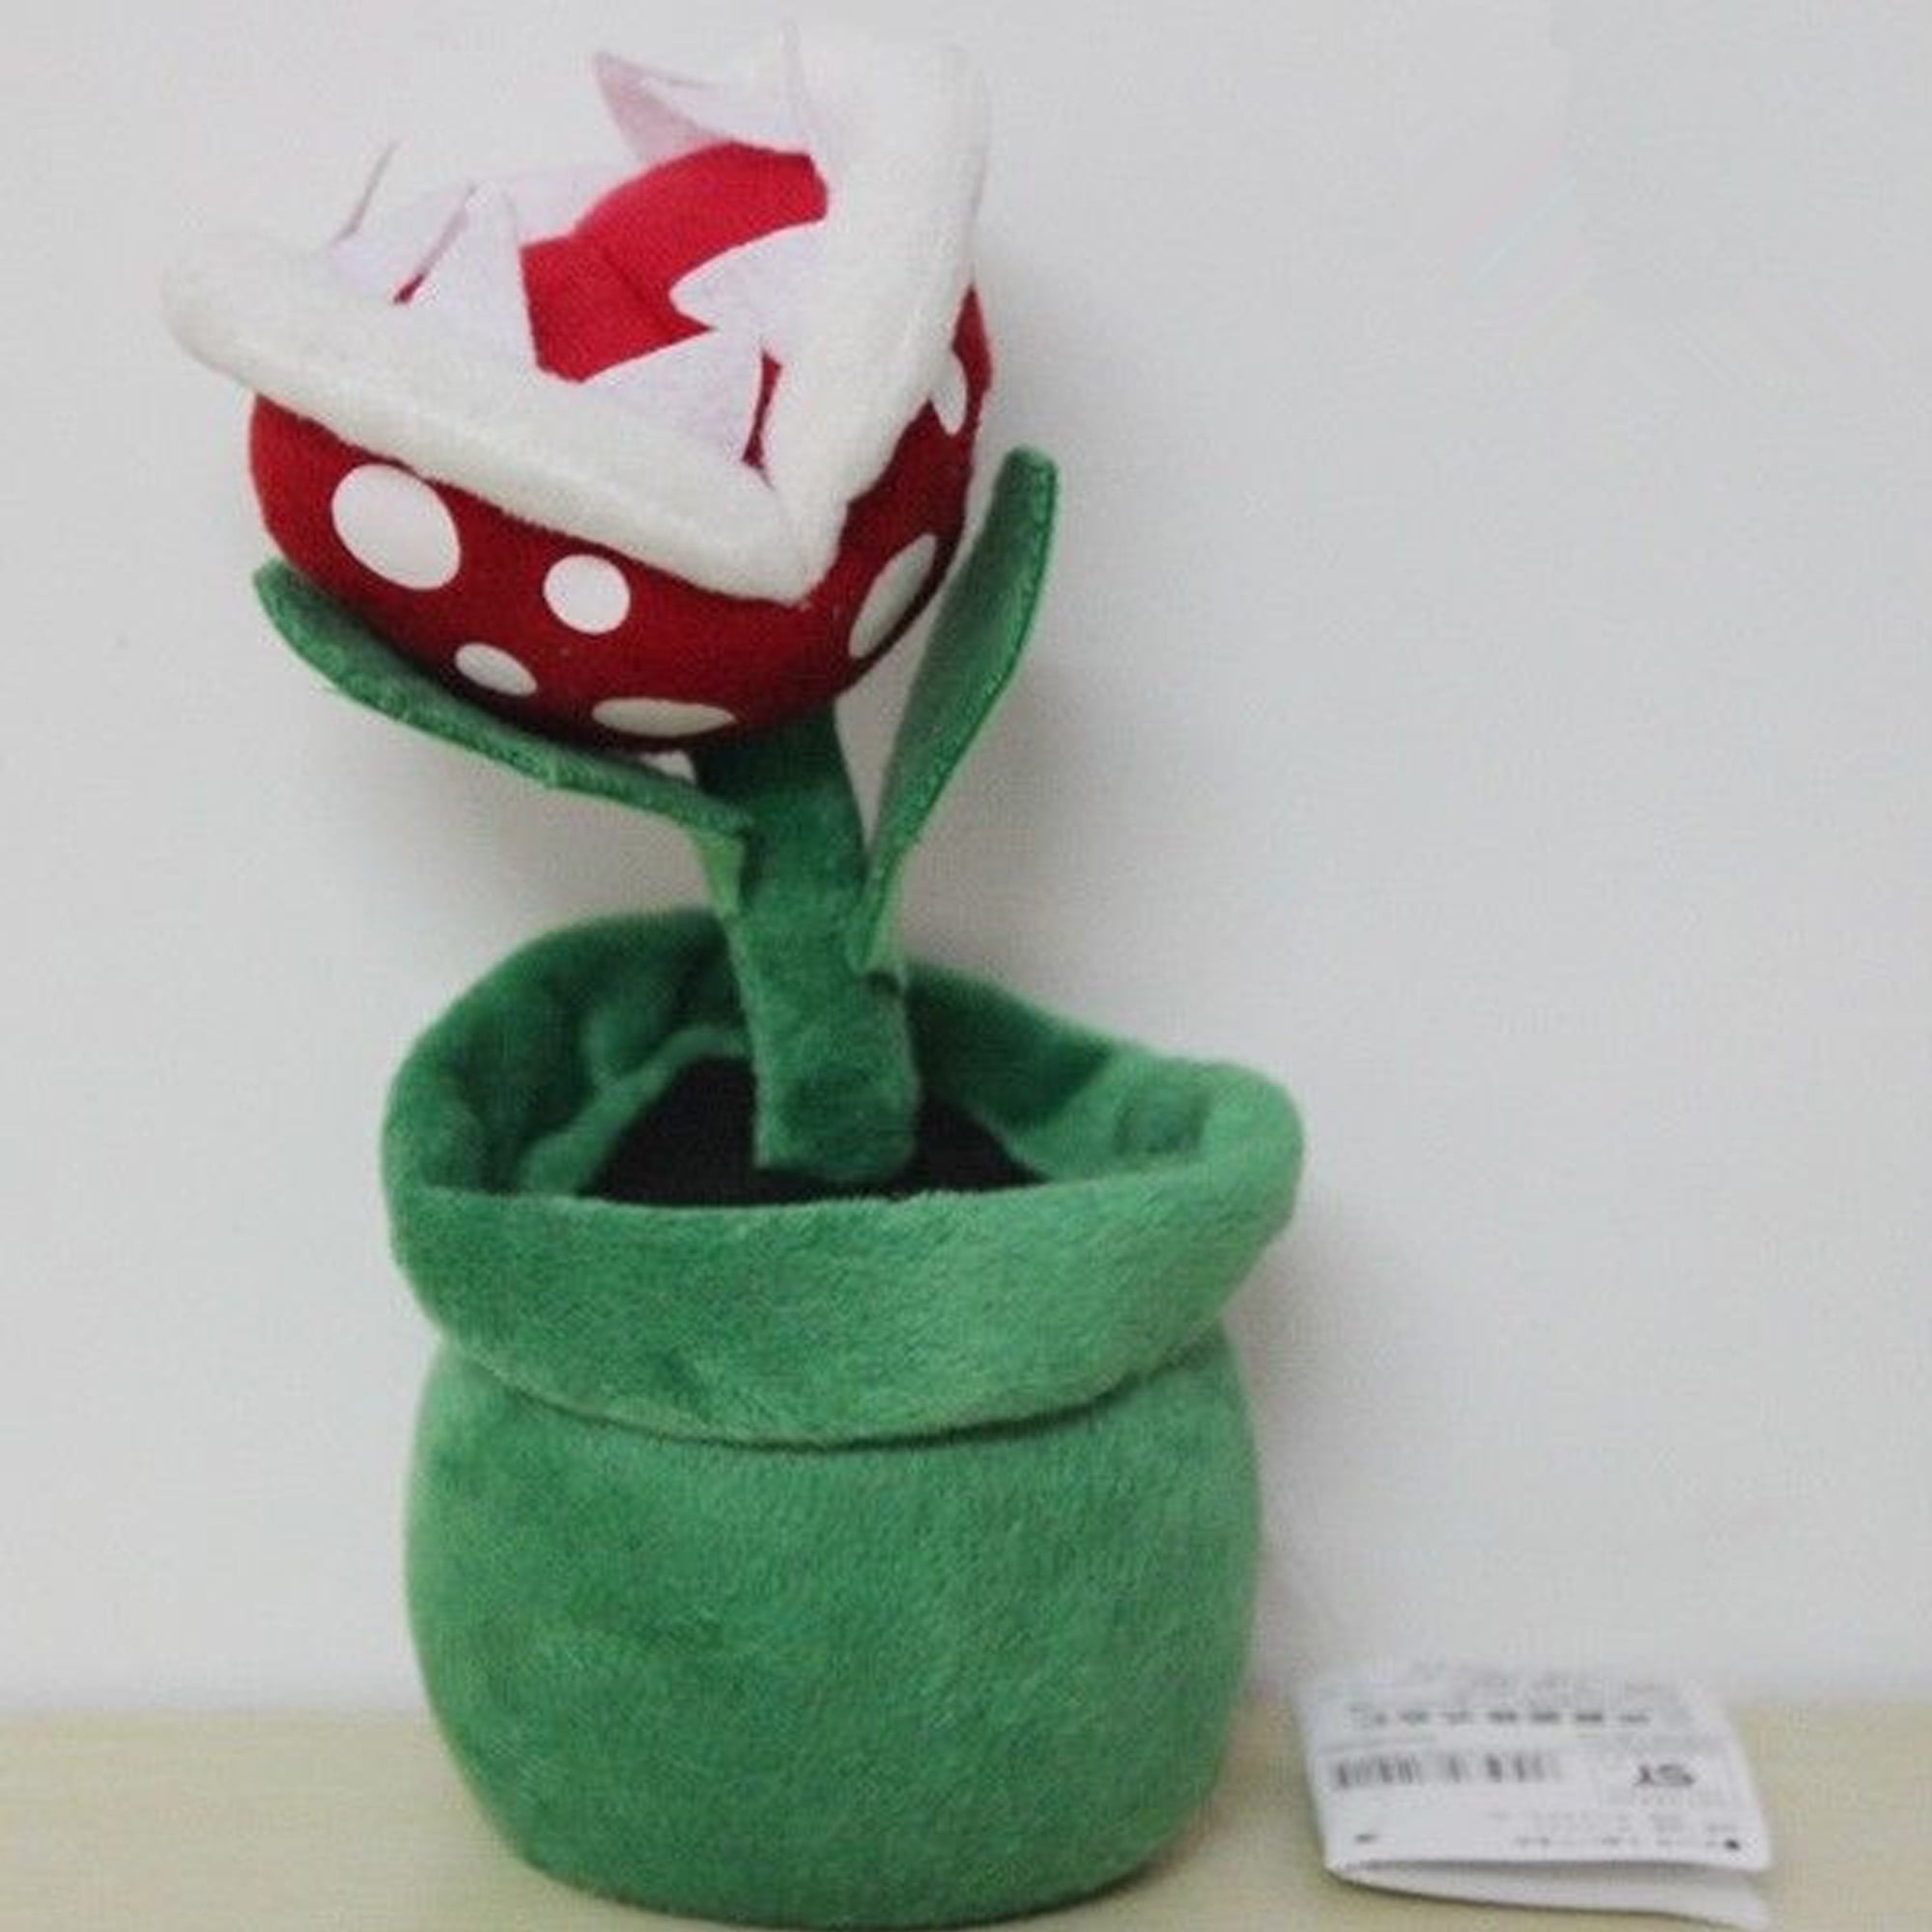 Piranha Plant Super Mario Bros Soft Plush Stuffed Doll Toy Figure Cuddly Gift